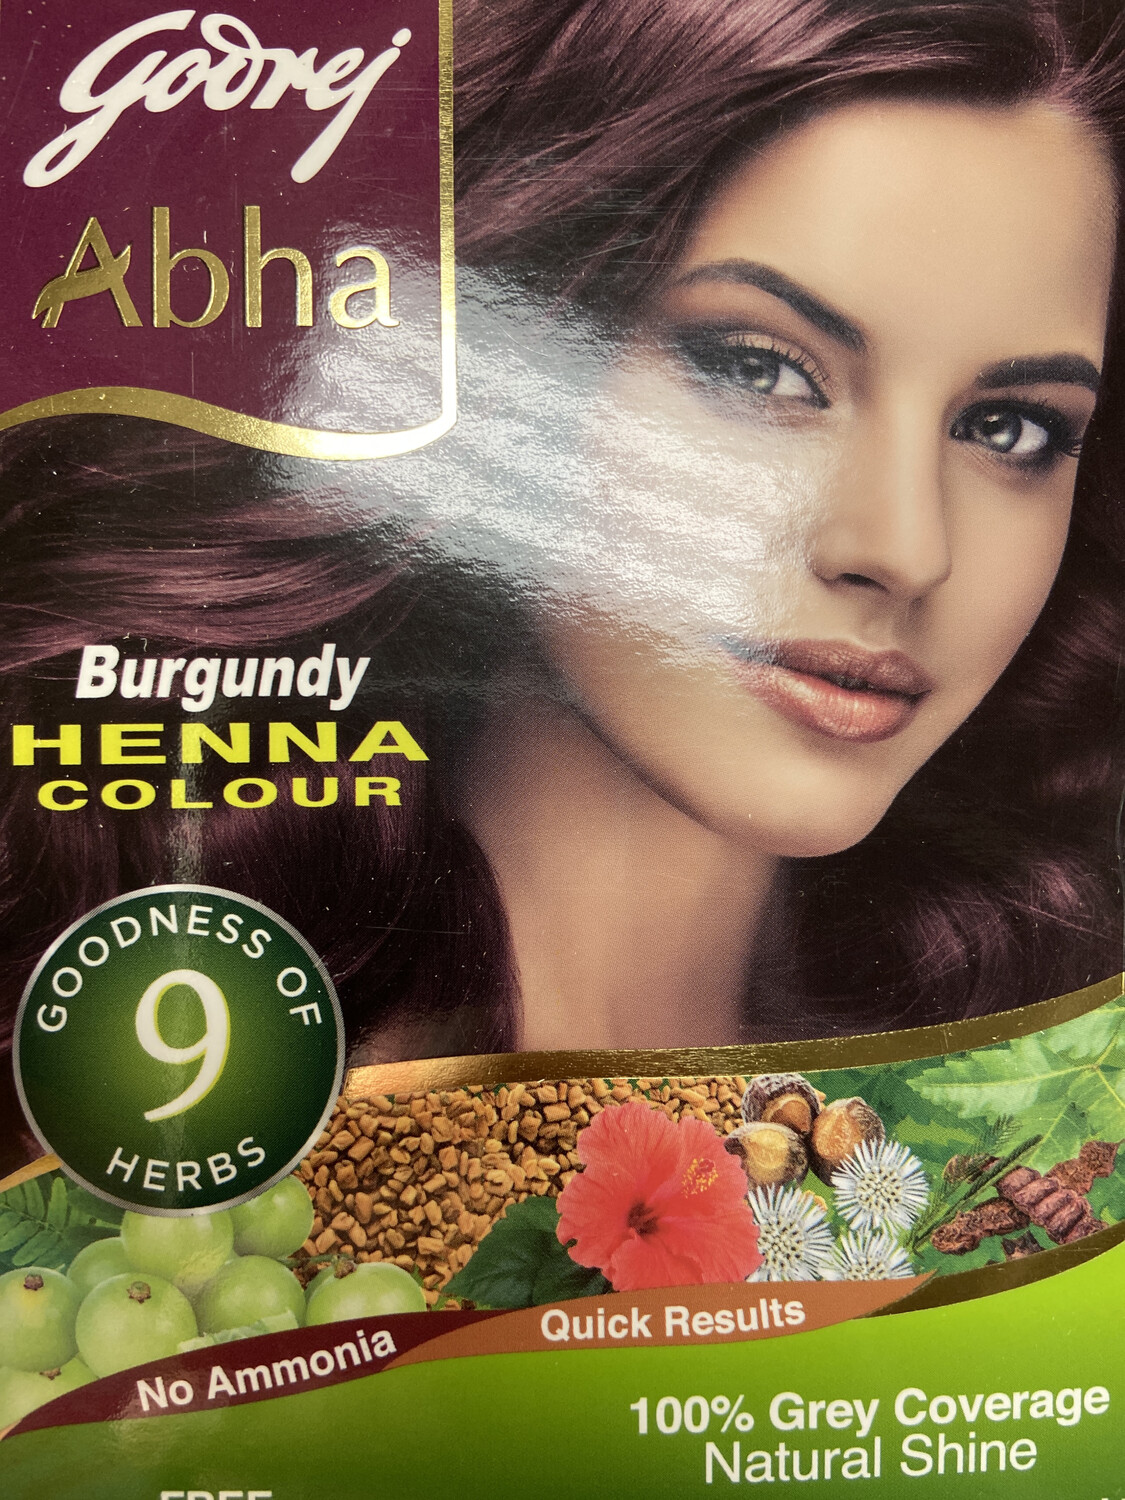 Godrej Abha Burgundy Henna Color 60g